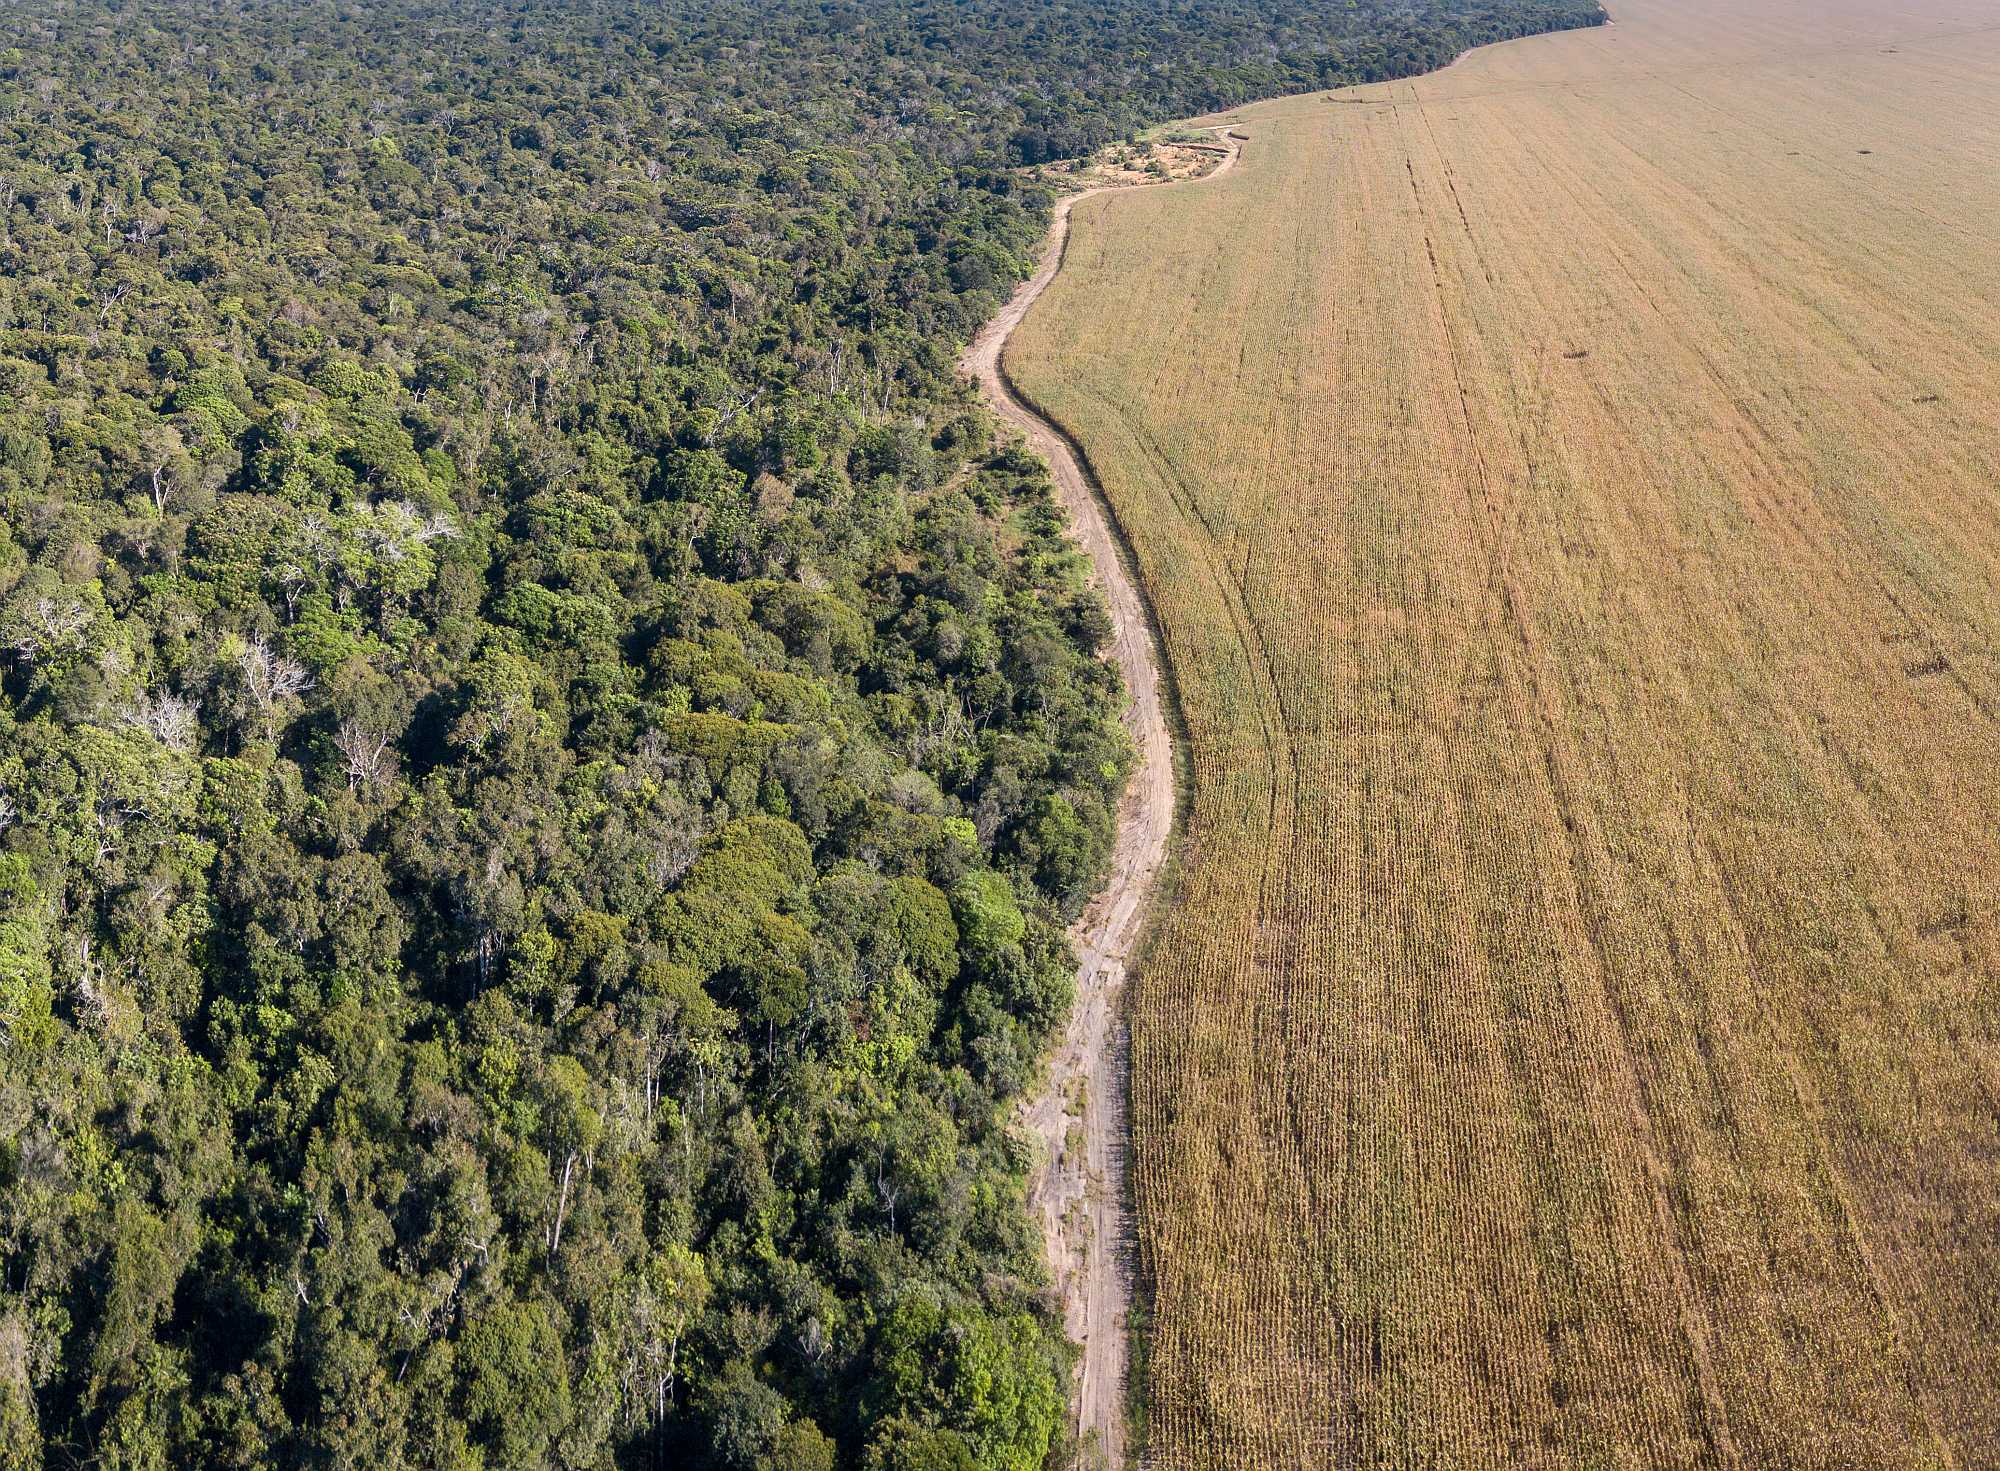 The Amazon rainforest meets soybean fields in Mato Grosso, Brazil. Paralaxis/Shutterstock